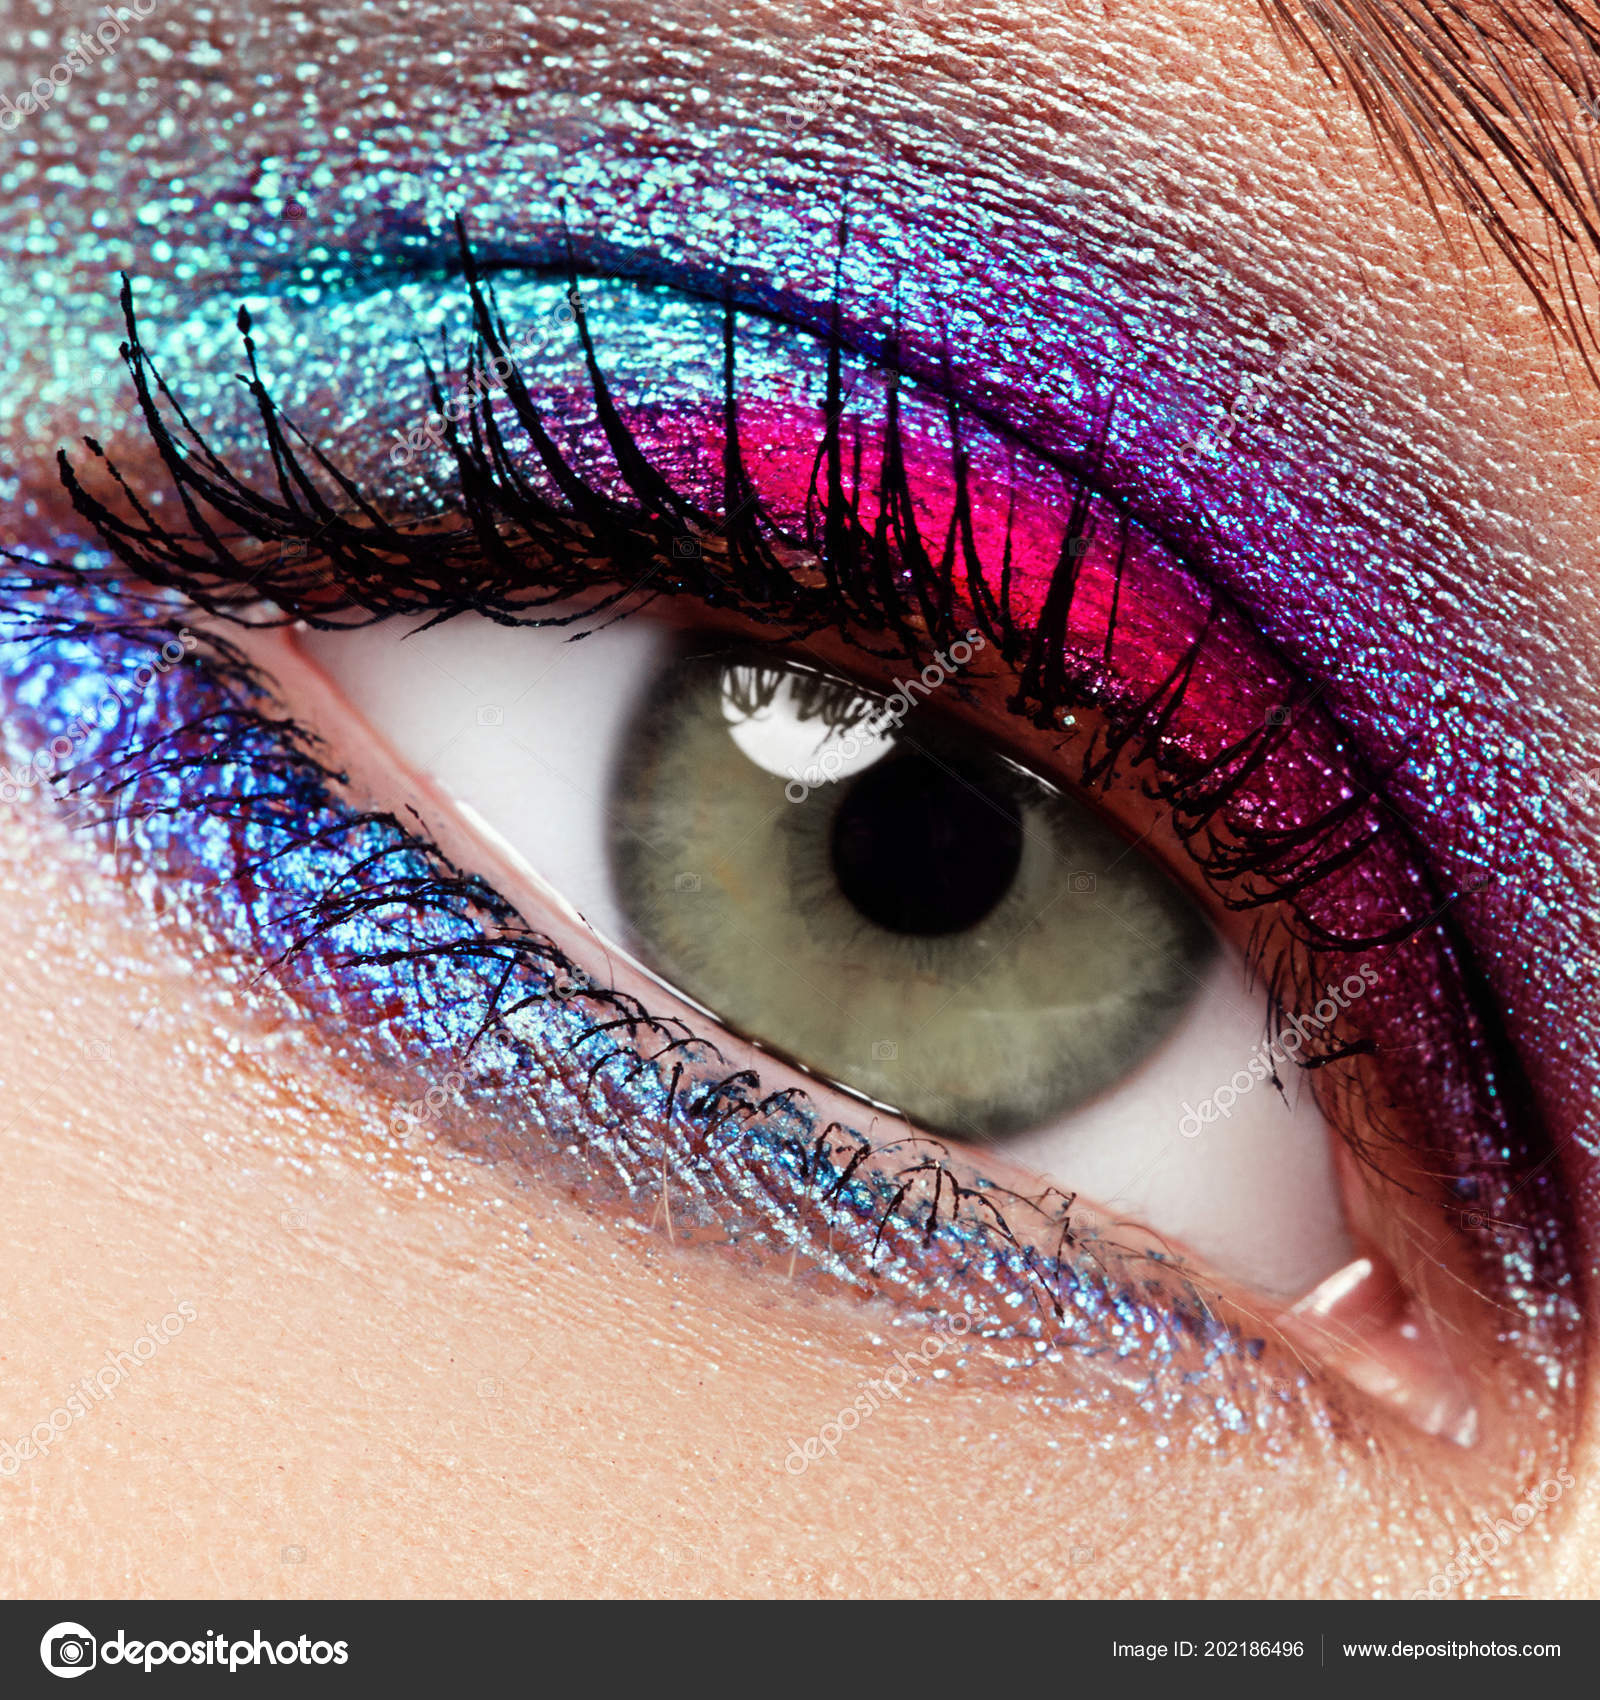 Creative Eye Makeup Beauty Cosmetics Makeup Magic Eyes Look Creative Eye Makeup Macro